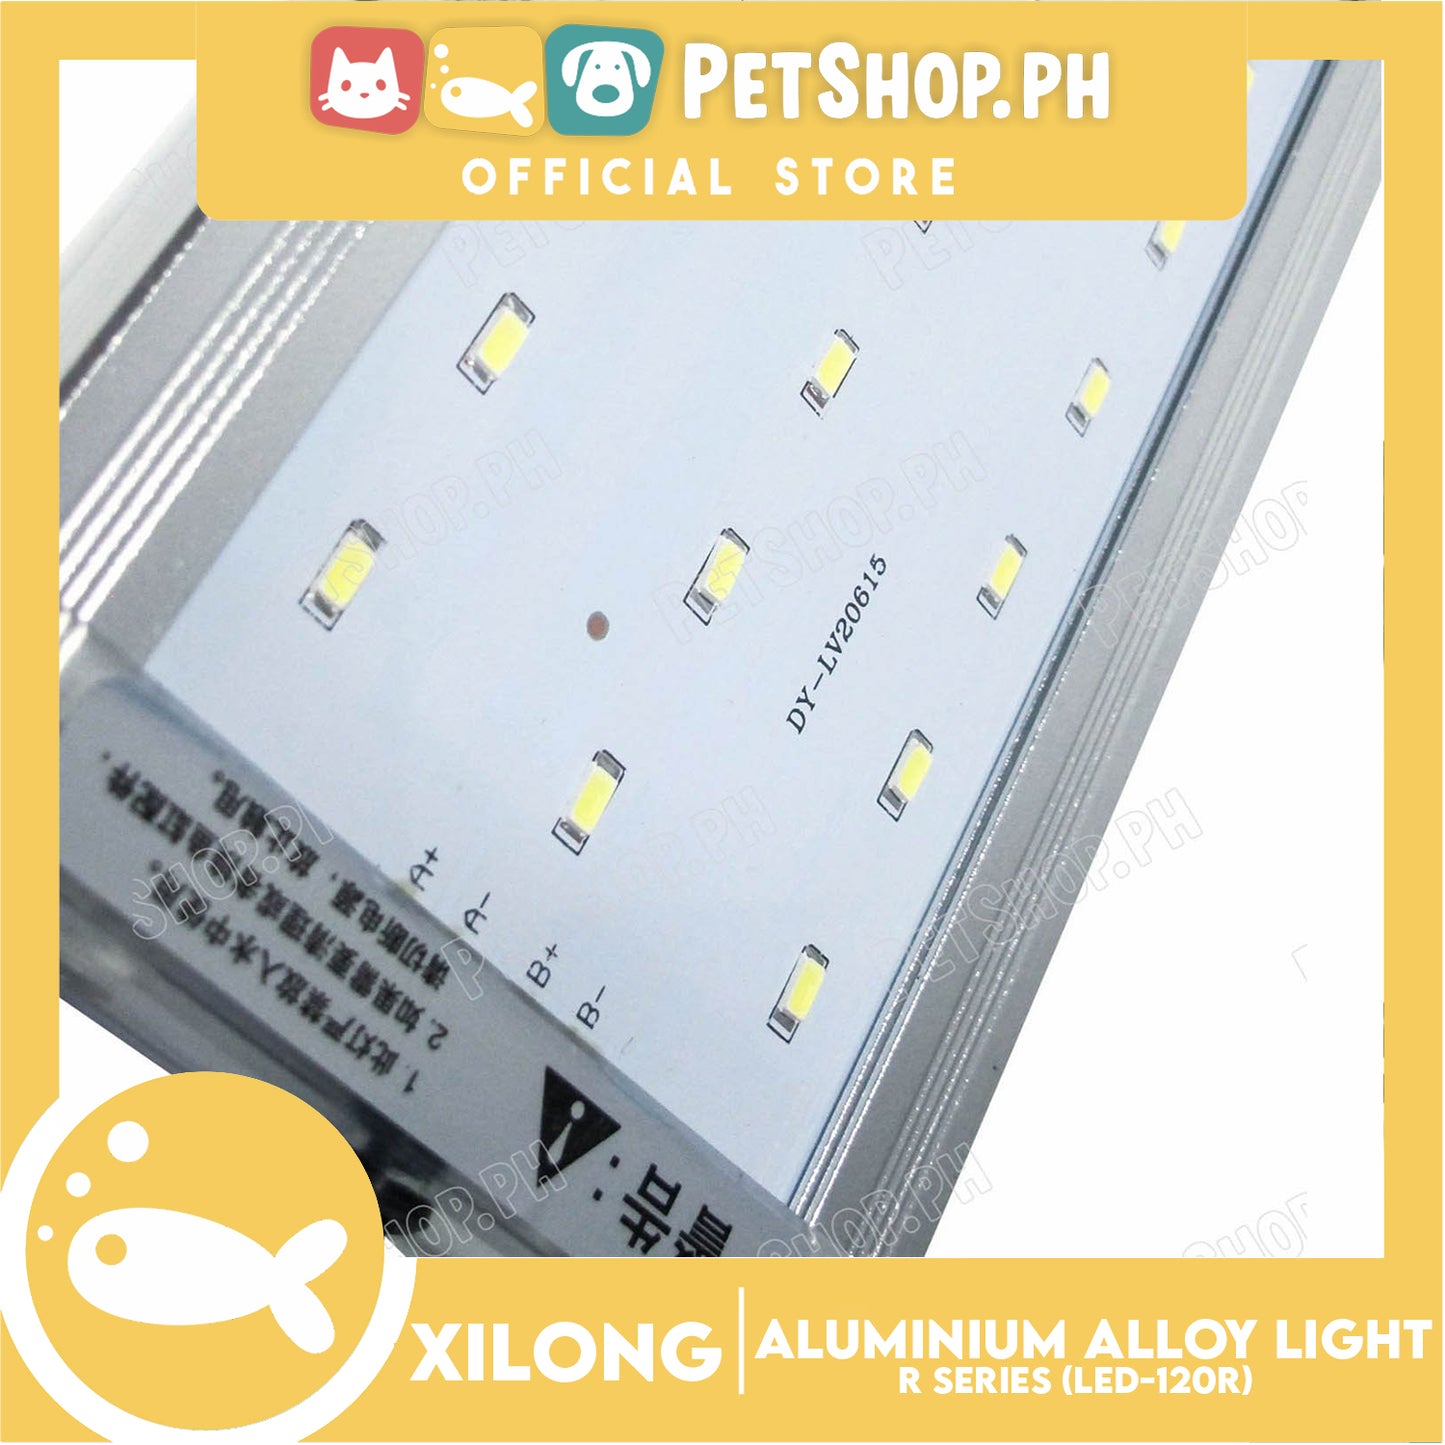 LED-120R Alloy Alum Bracket Light 41w